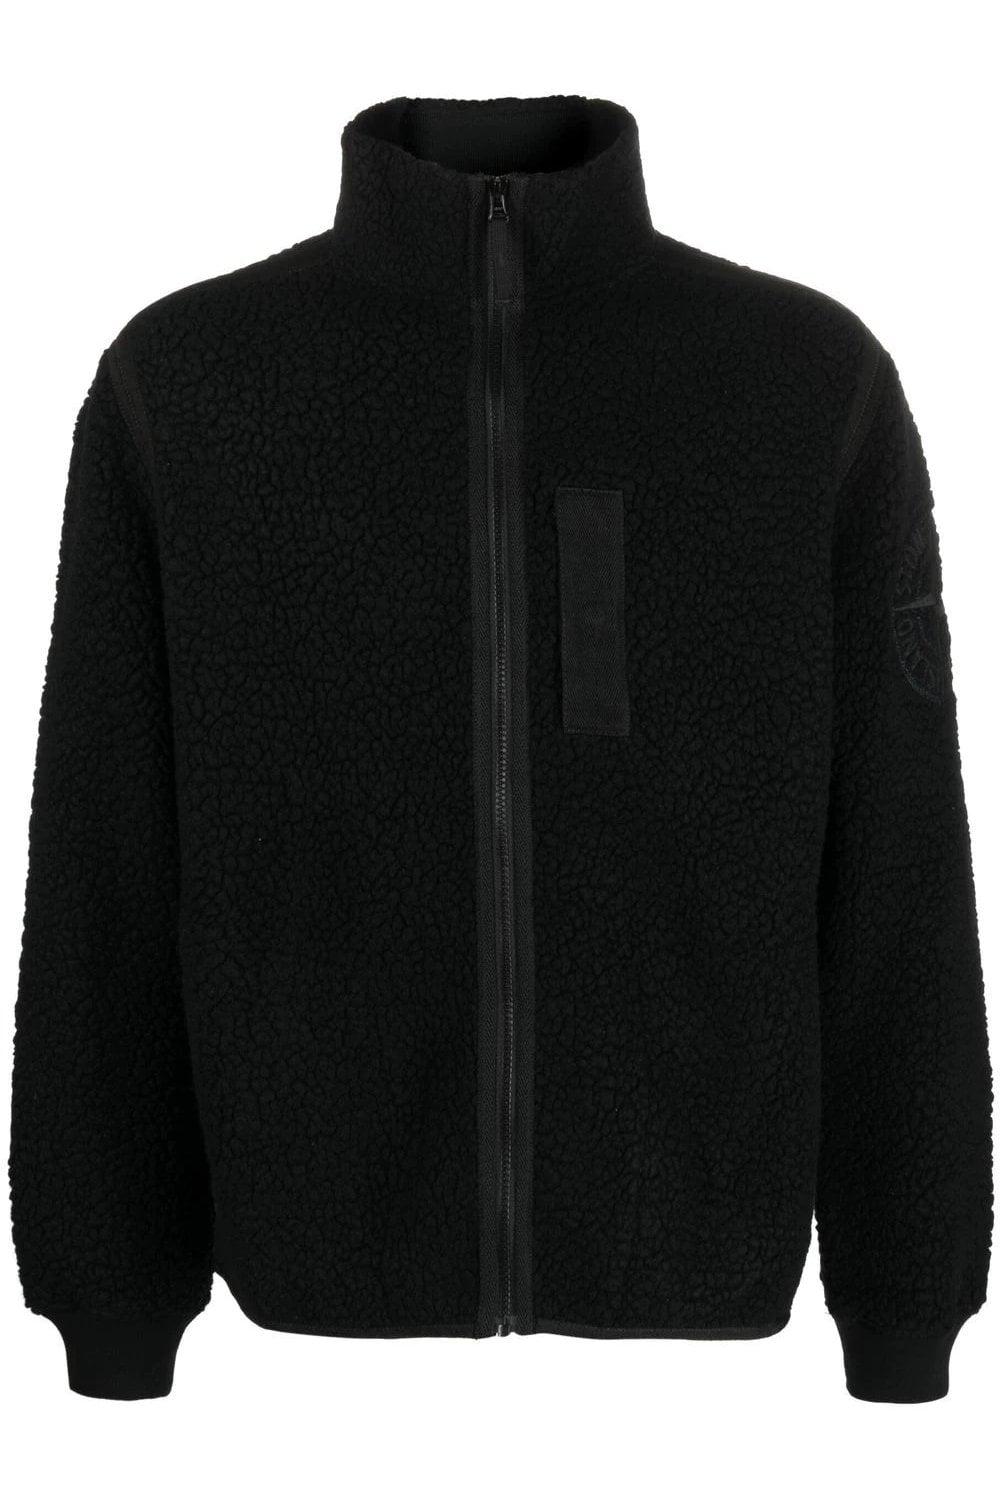 Stone Island Teddy Zip Sweatshirt in Black for Men | Lyst Canada